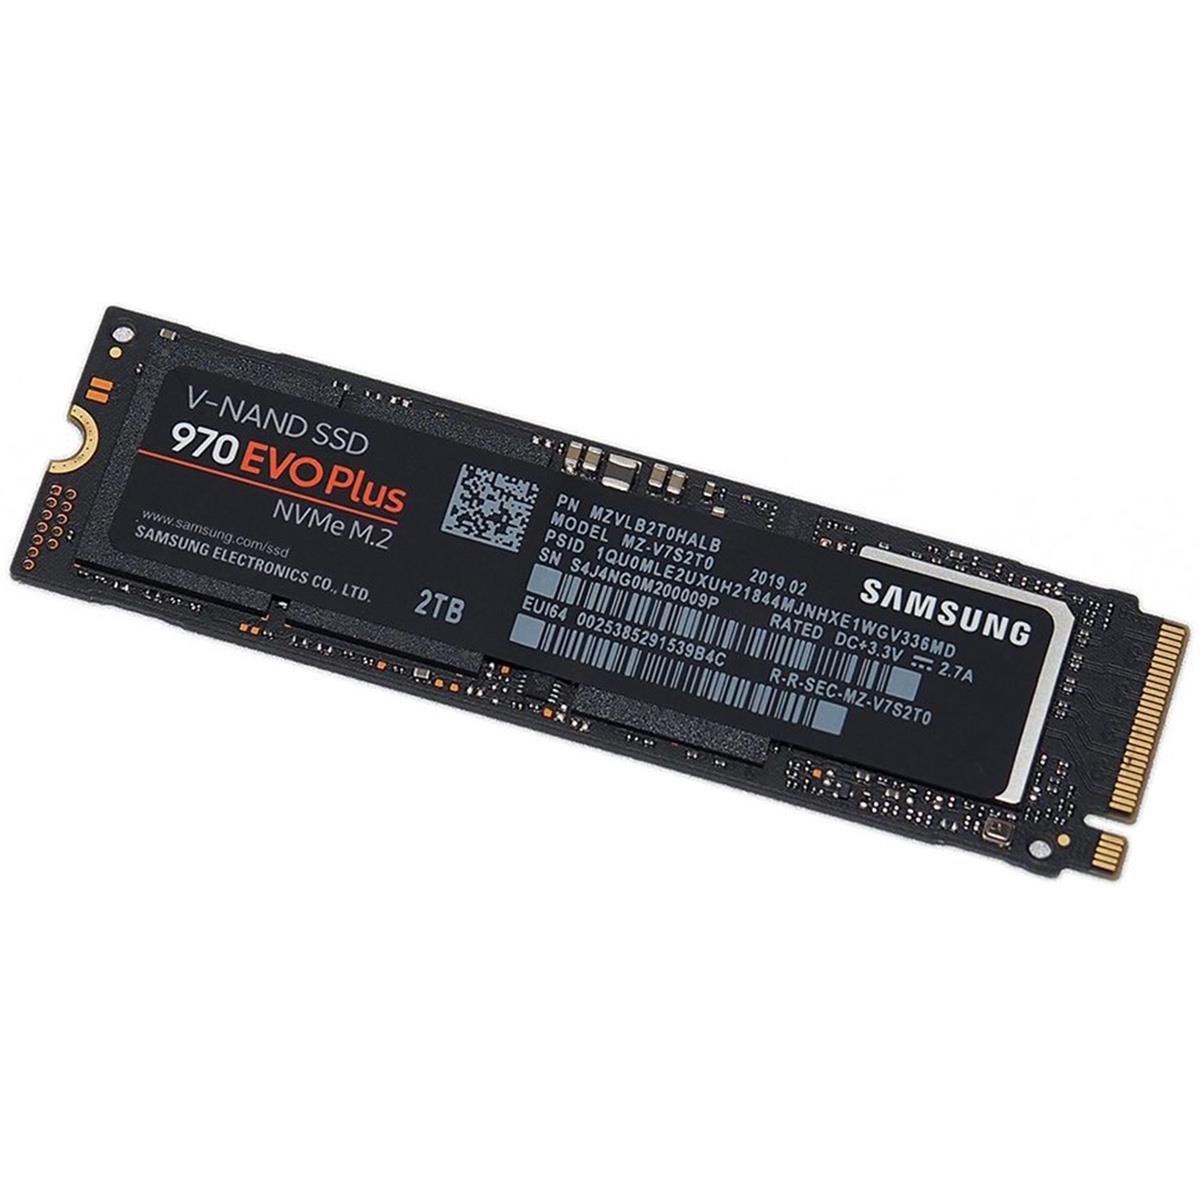 Samsung SSD 970 EVO Plus 2TB Review: Burly, Speedy NVMe